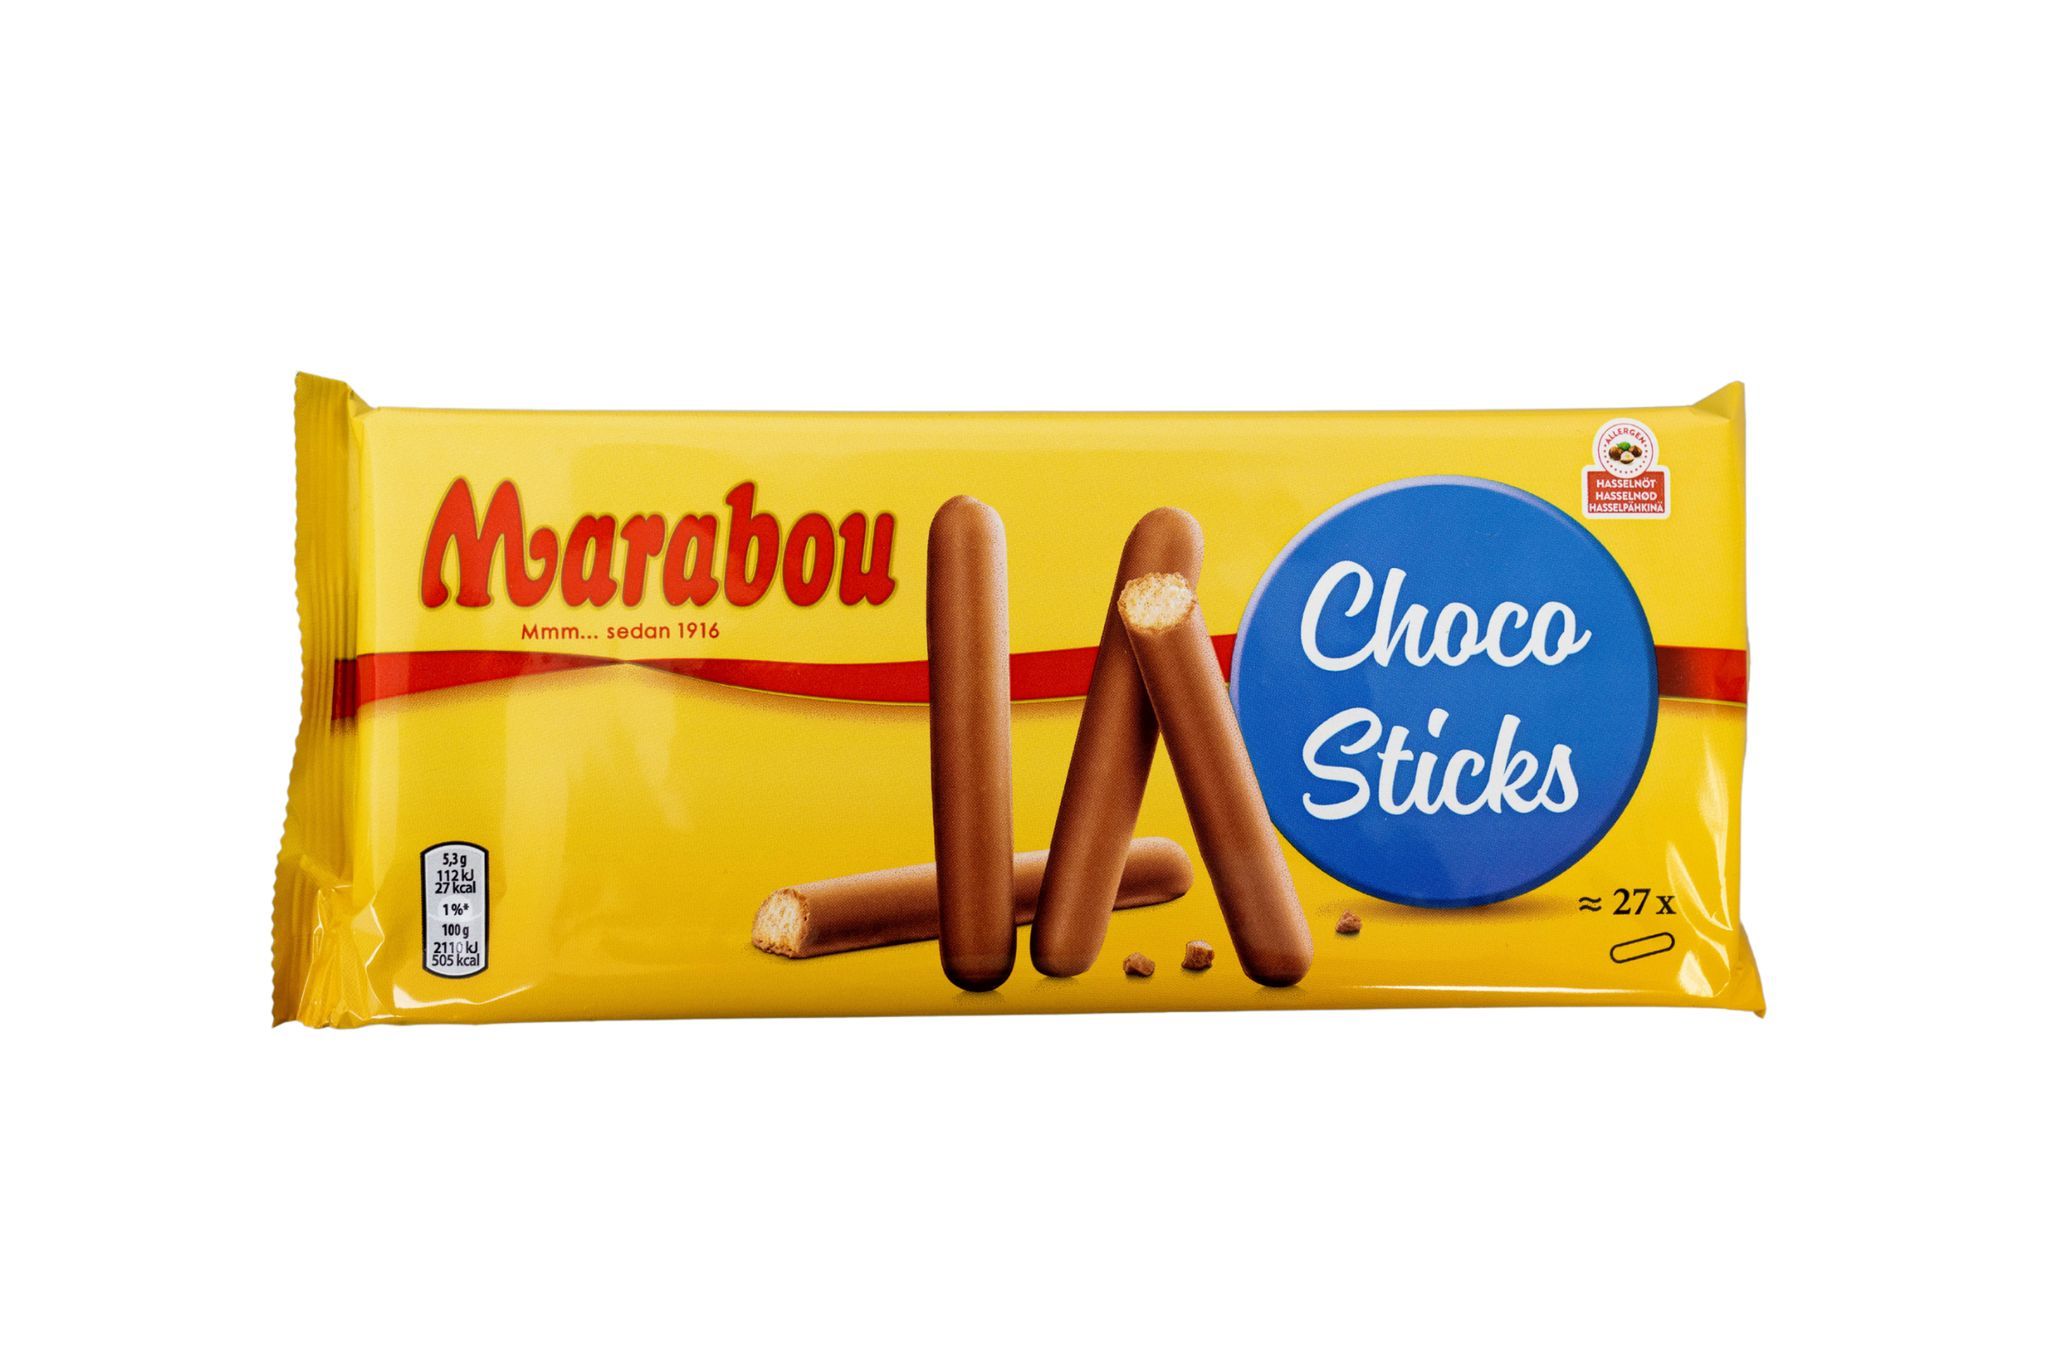 Шоколадные палочки. Норвежский шоколад Marabou. Popeo шоколадные палочки. Молочный шоколад палочки. Choco sticks trap